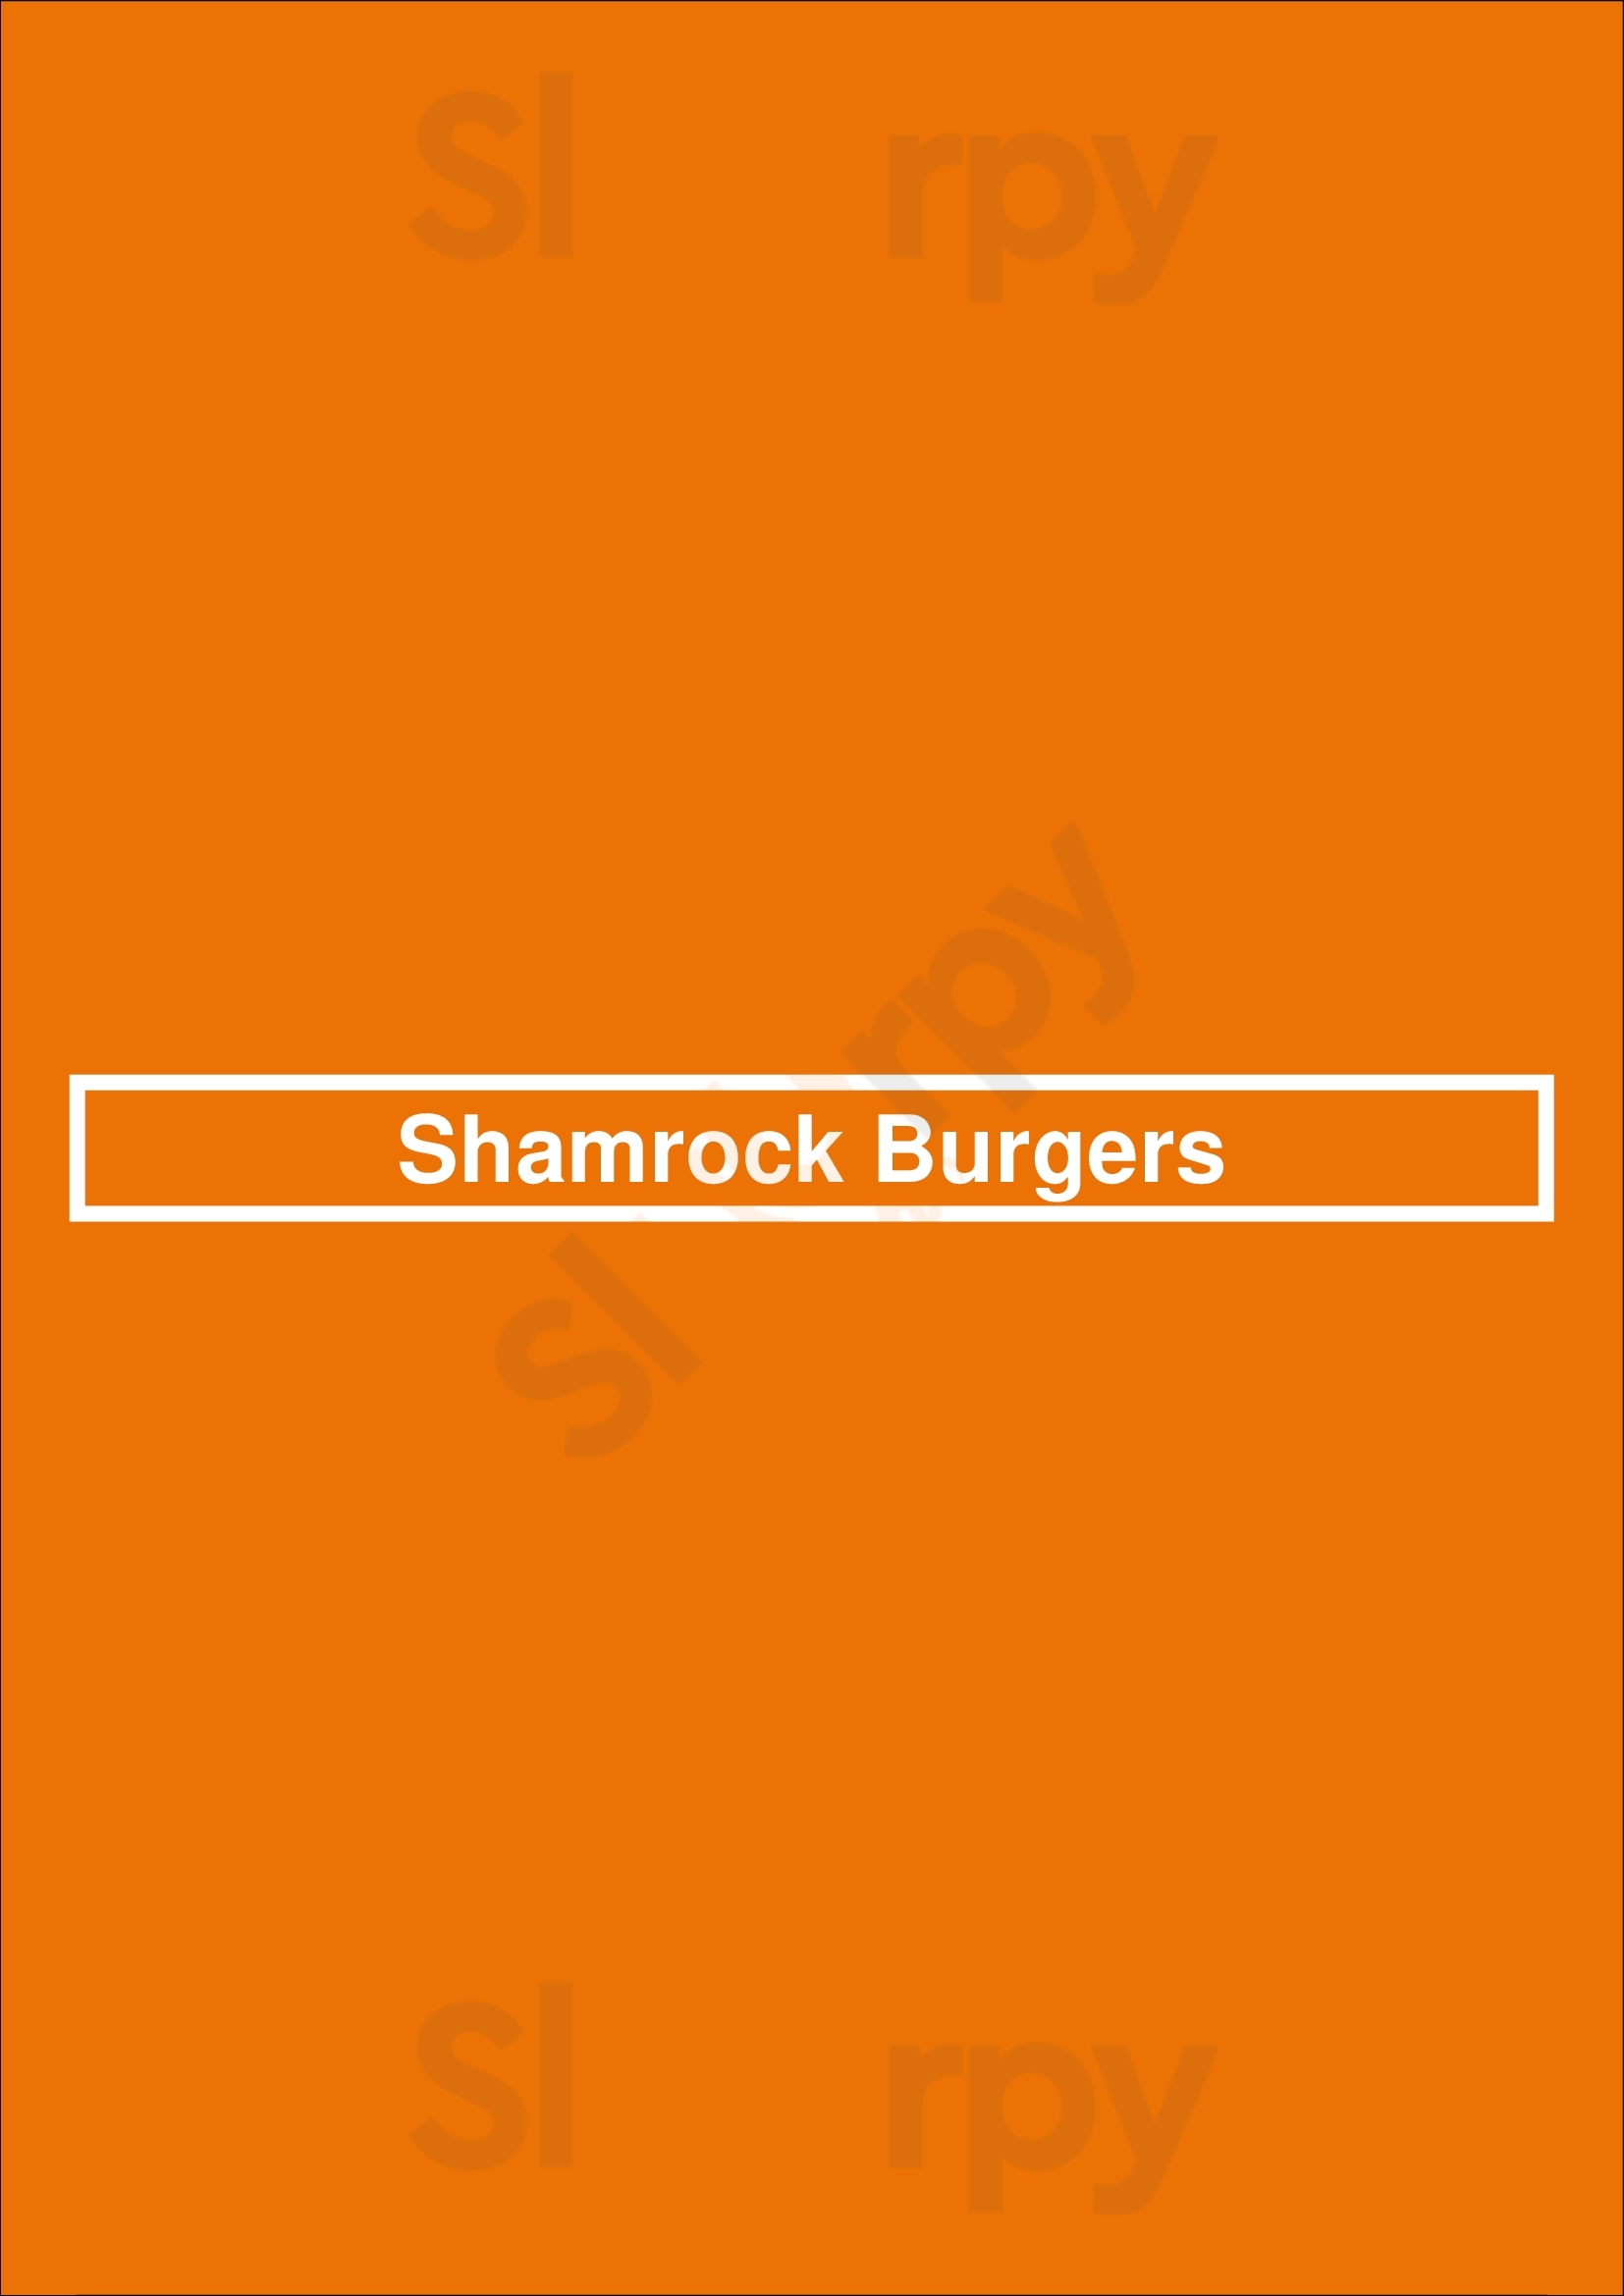 Shamrock Burgers Toronto Menu - 1